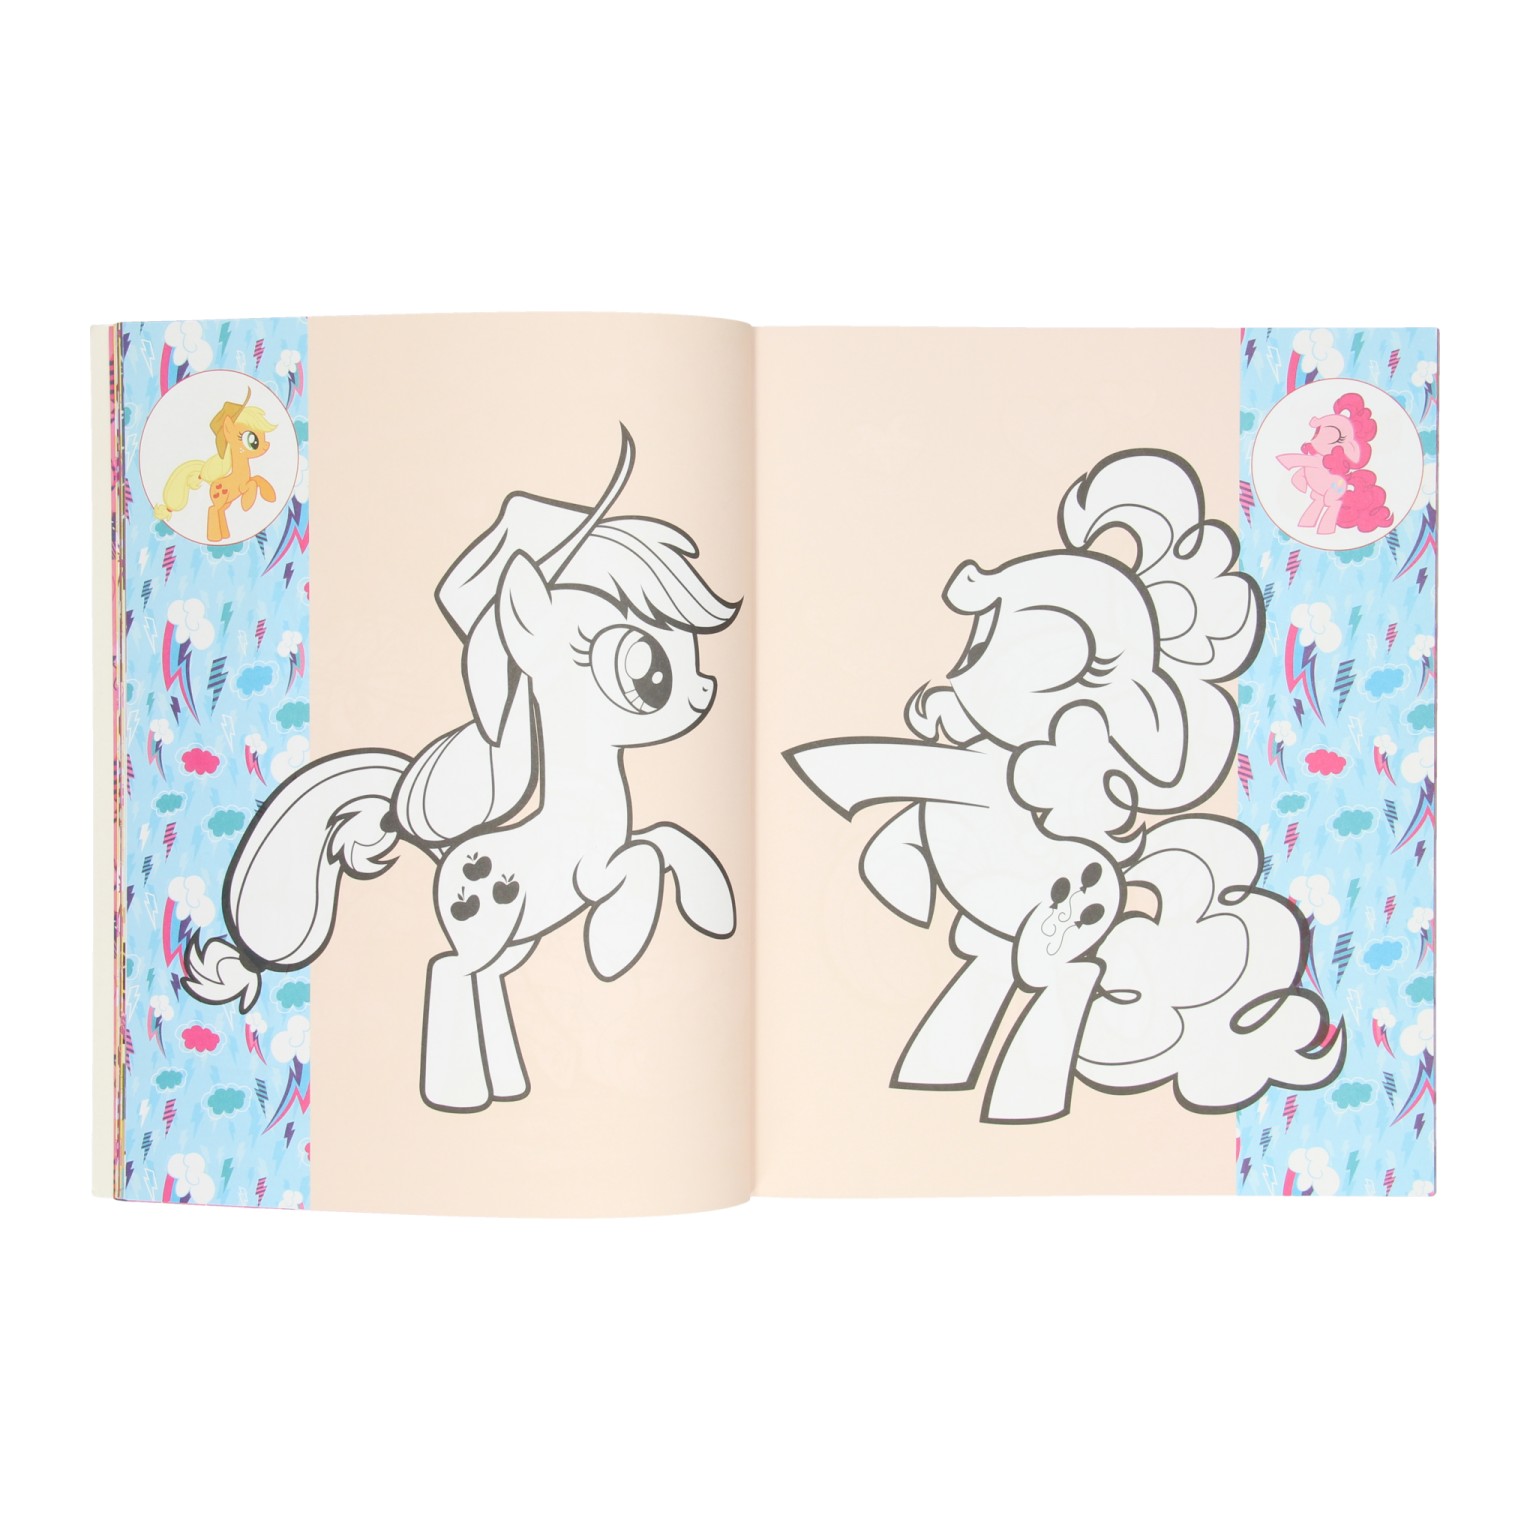 Kleurboek My Little Pony